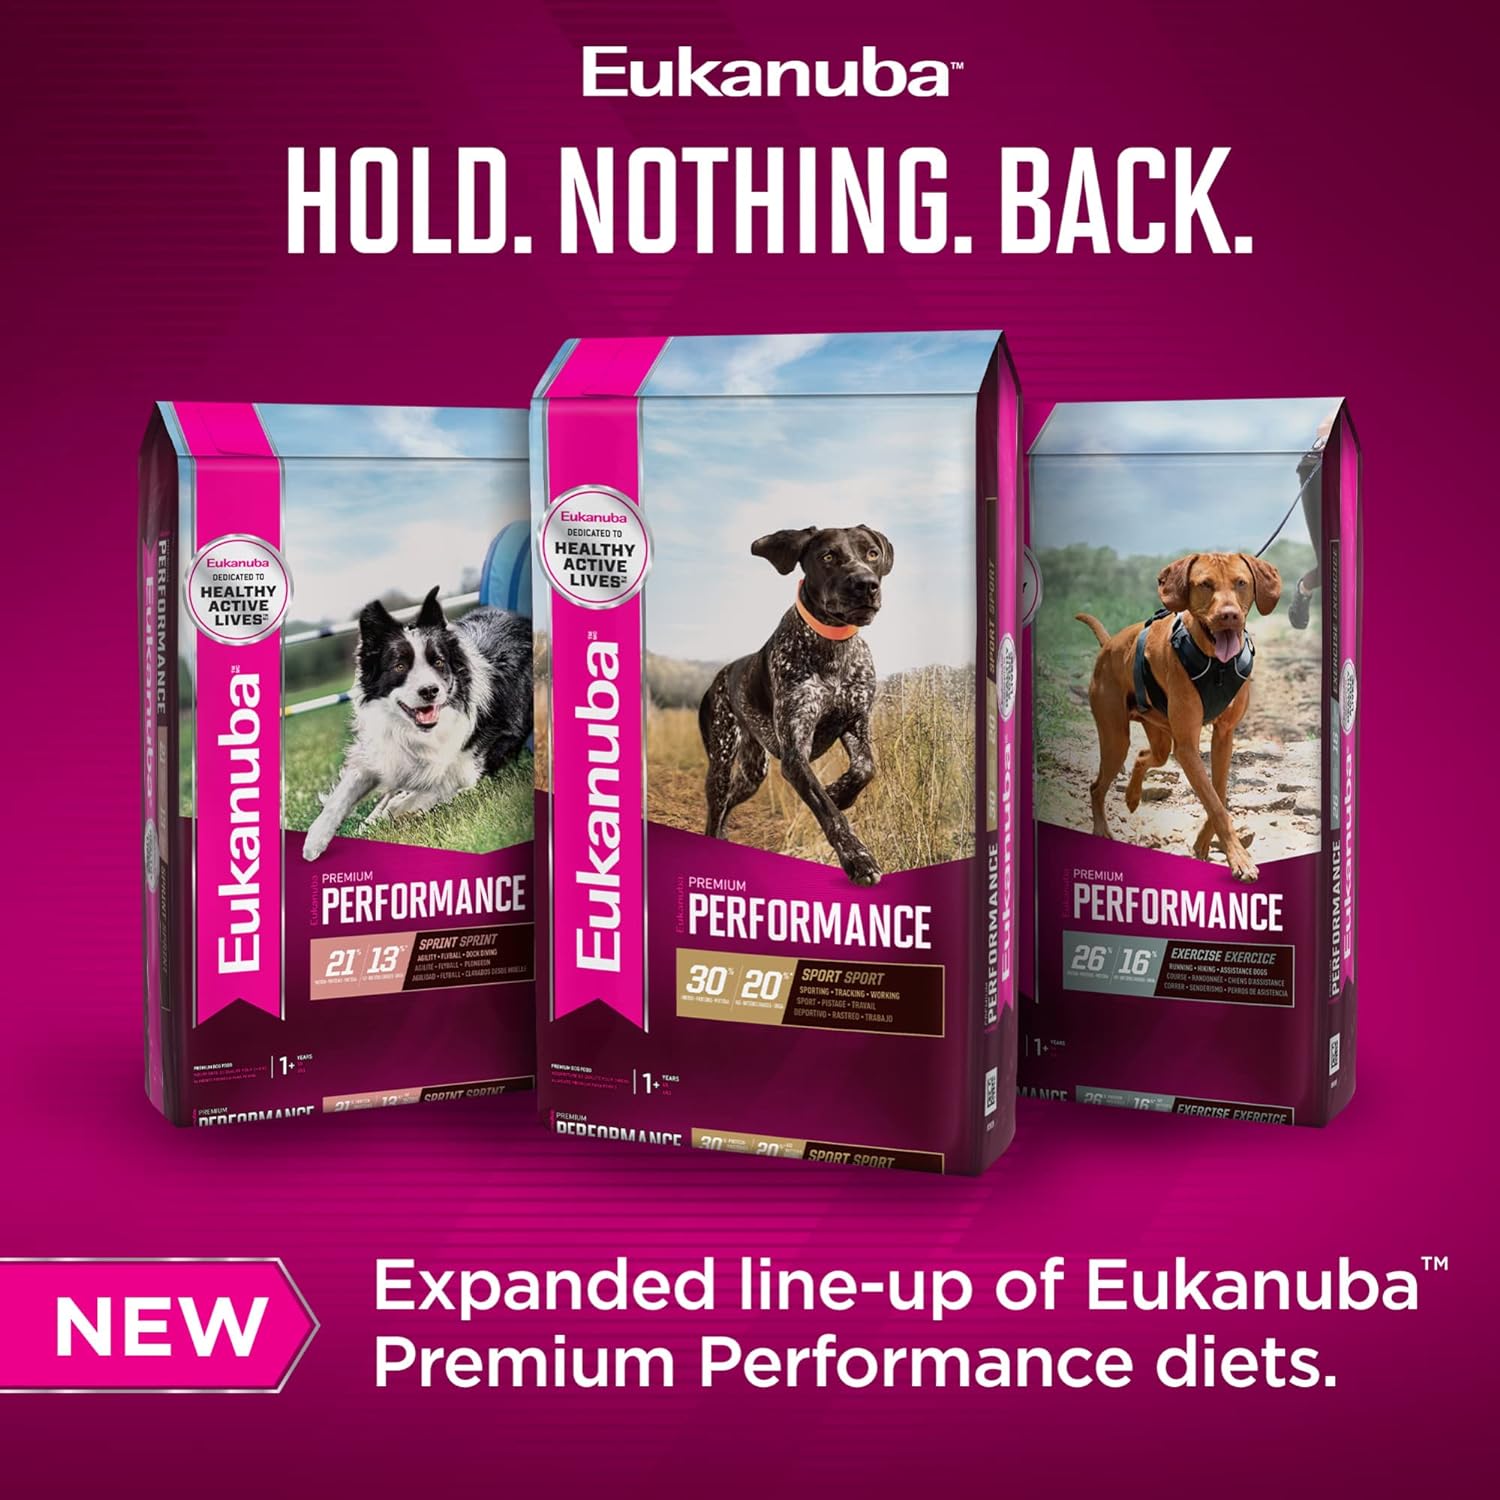 Eukanuba Premium Performance 26/16 Exercise Dry Dog Food – Gallery Image 10